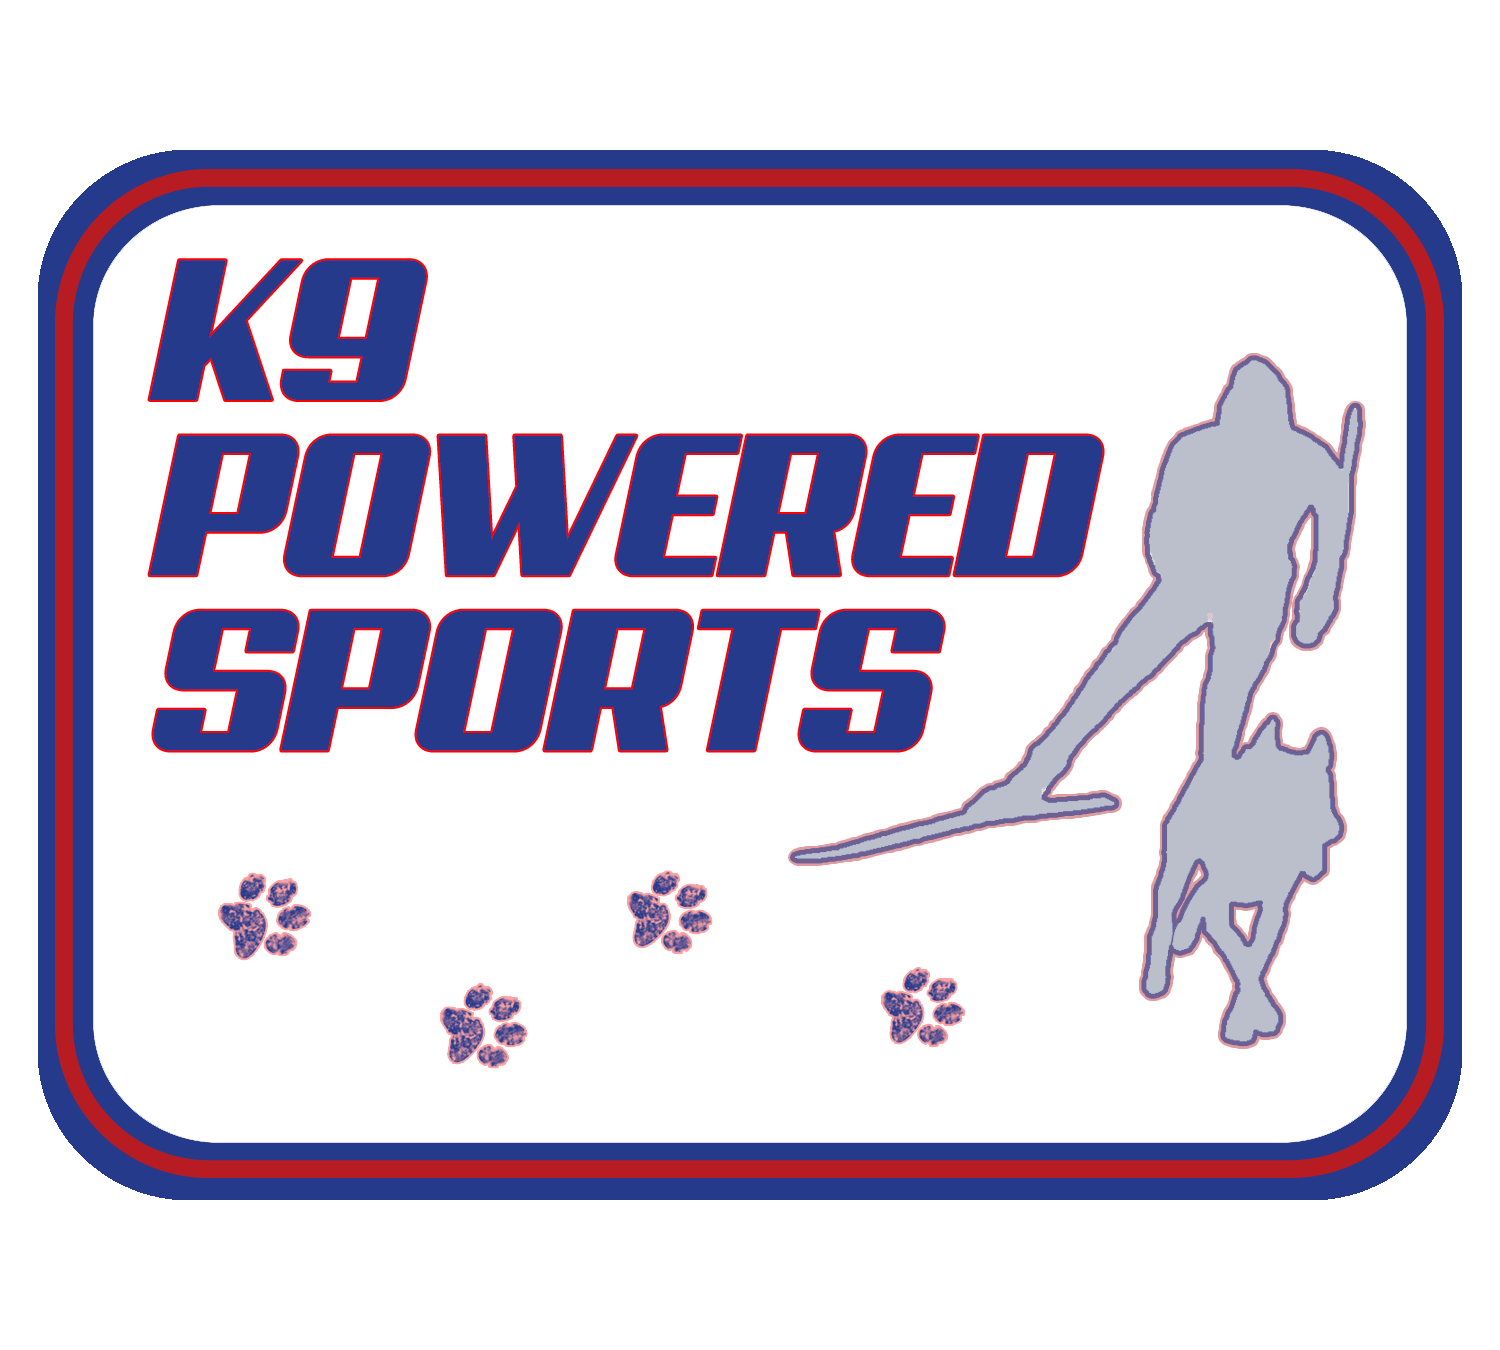 K9 Powered Sports logo